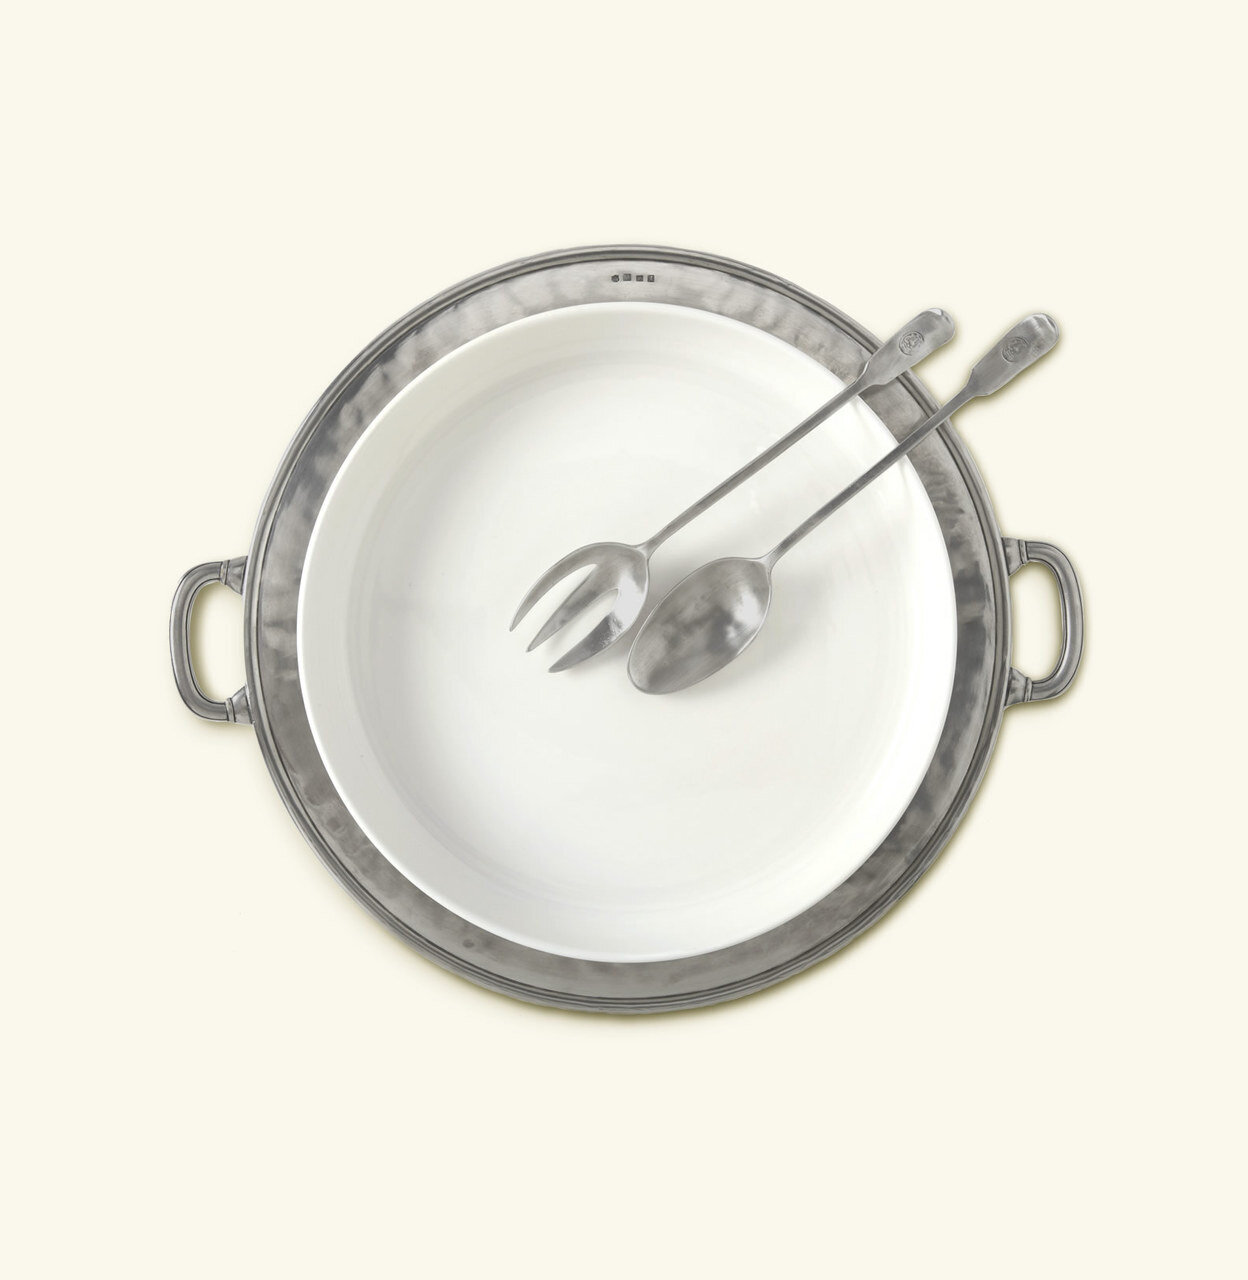 Match Pewter Convivio Round Serving/Casserole Platter With Handles - White